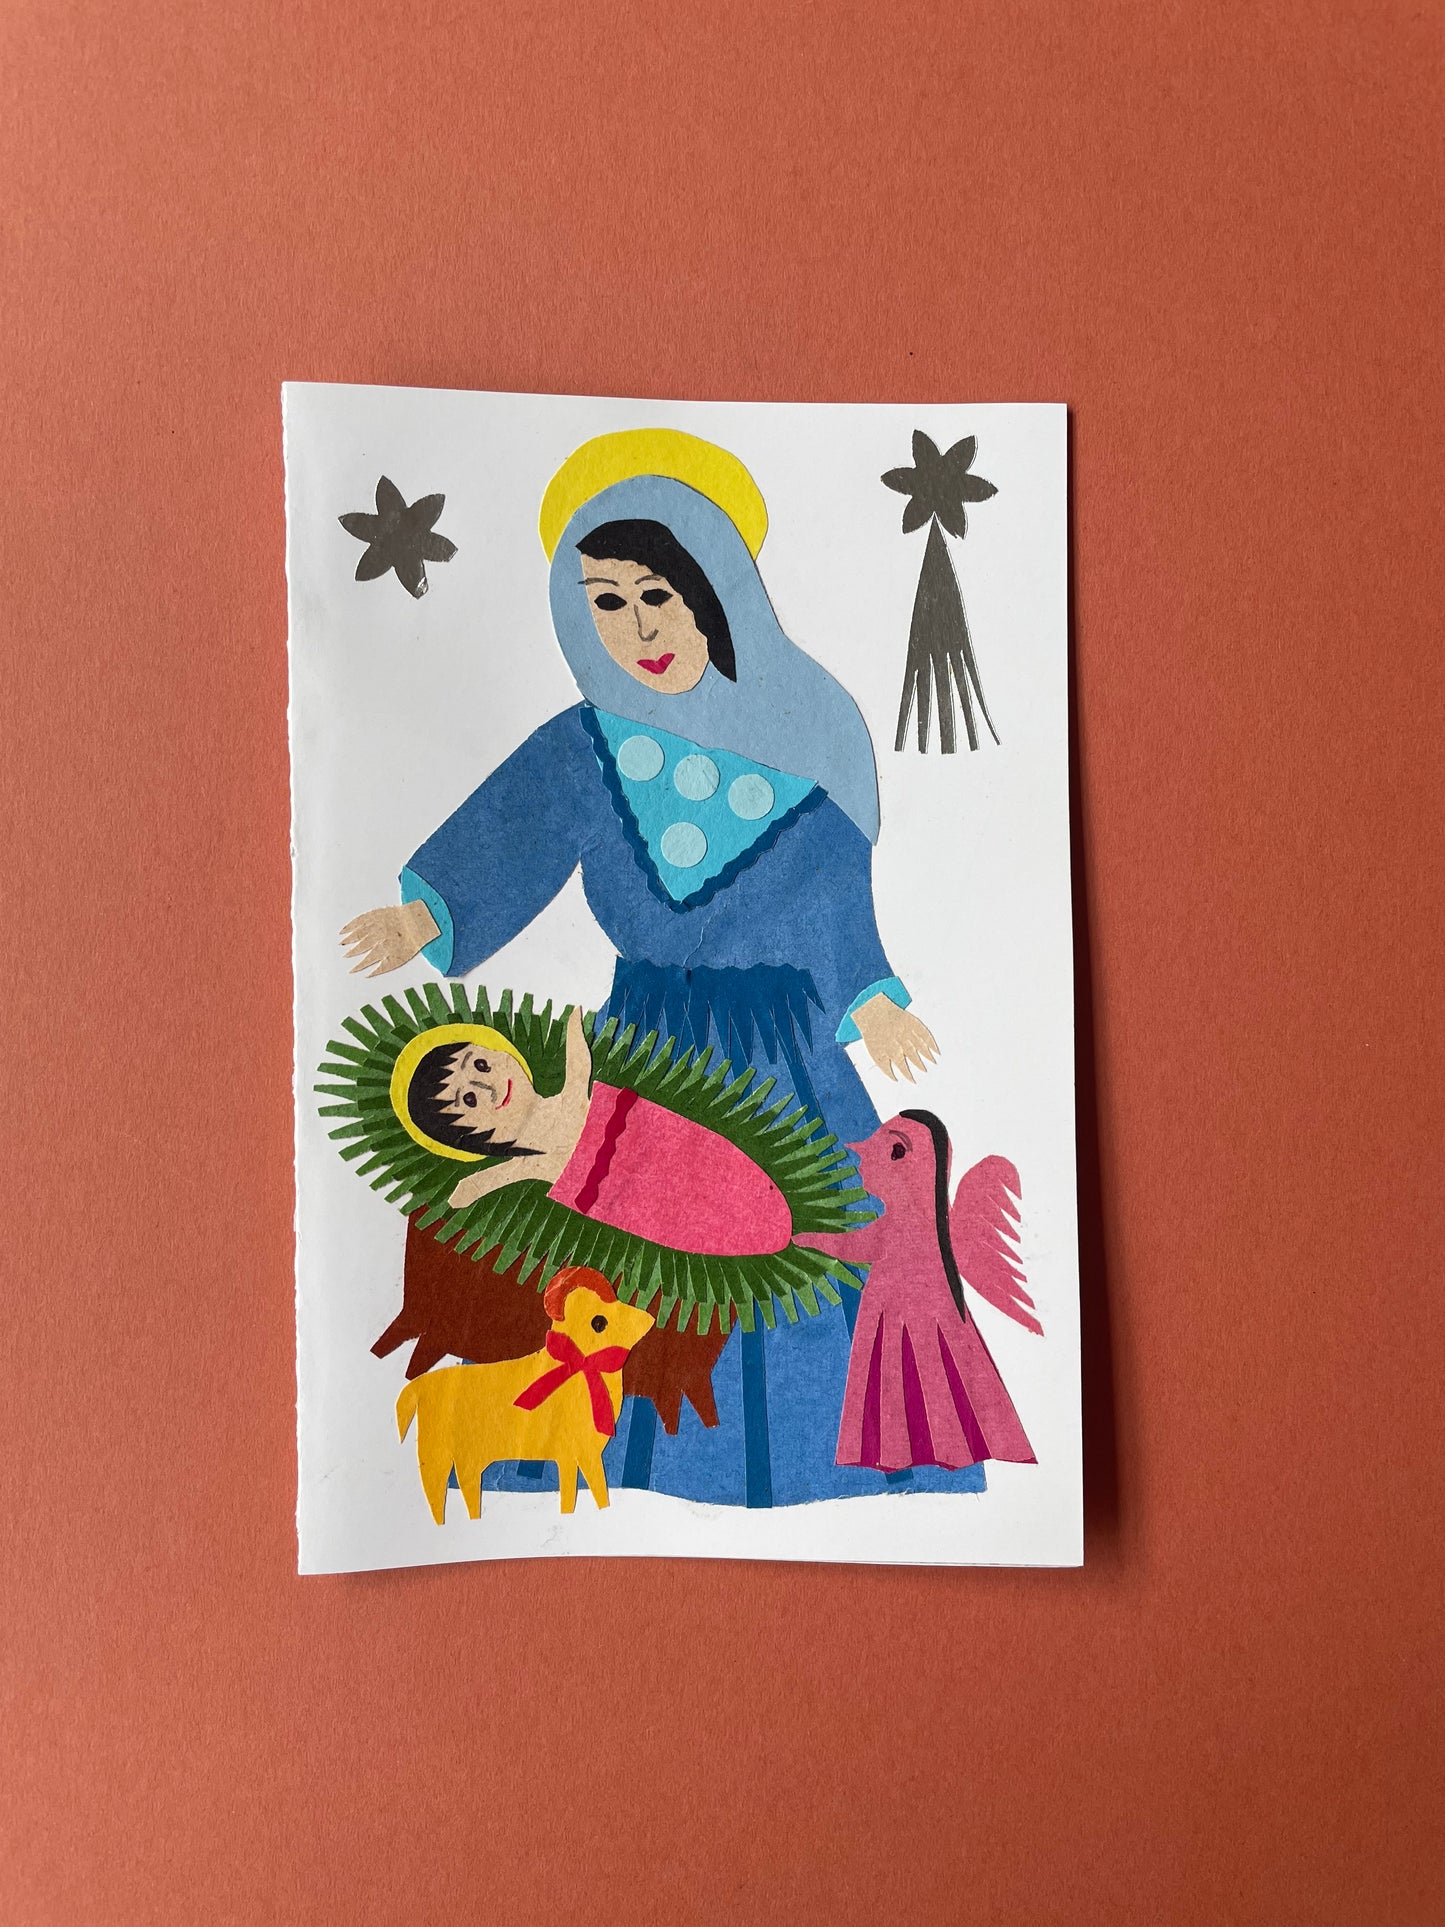 Papercut Christmas Card by Maria